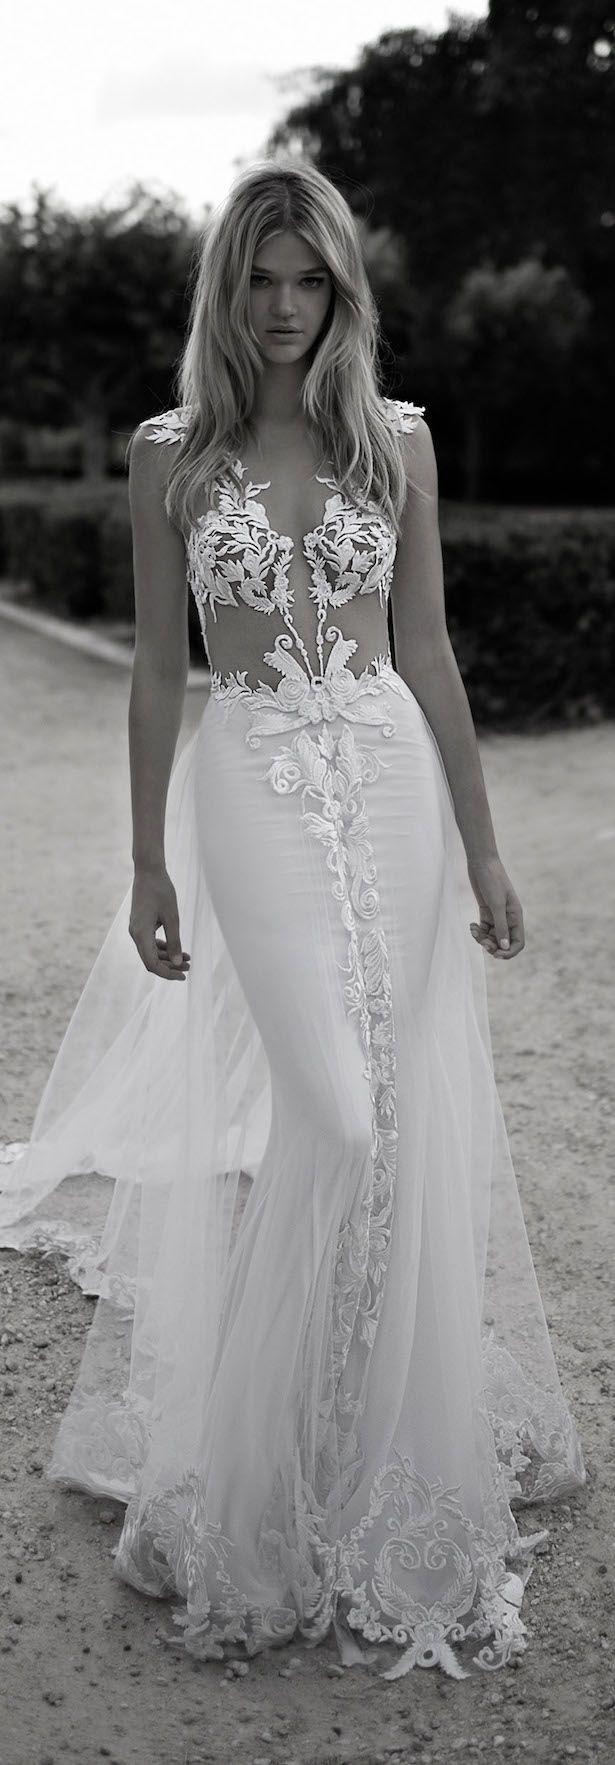 زفاف - Sexy Wedding Dress